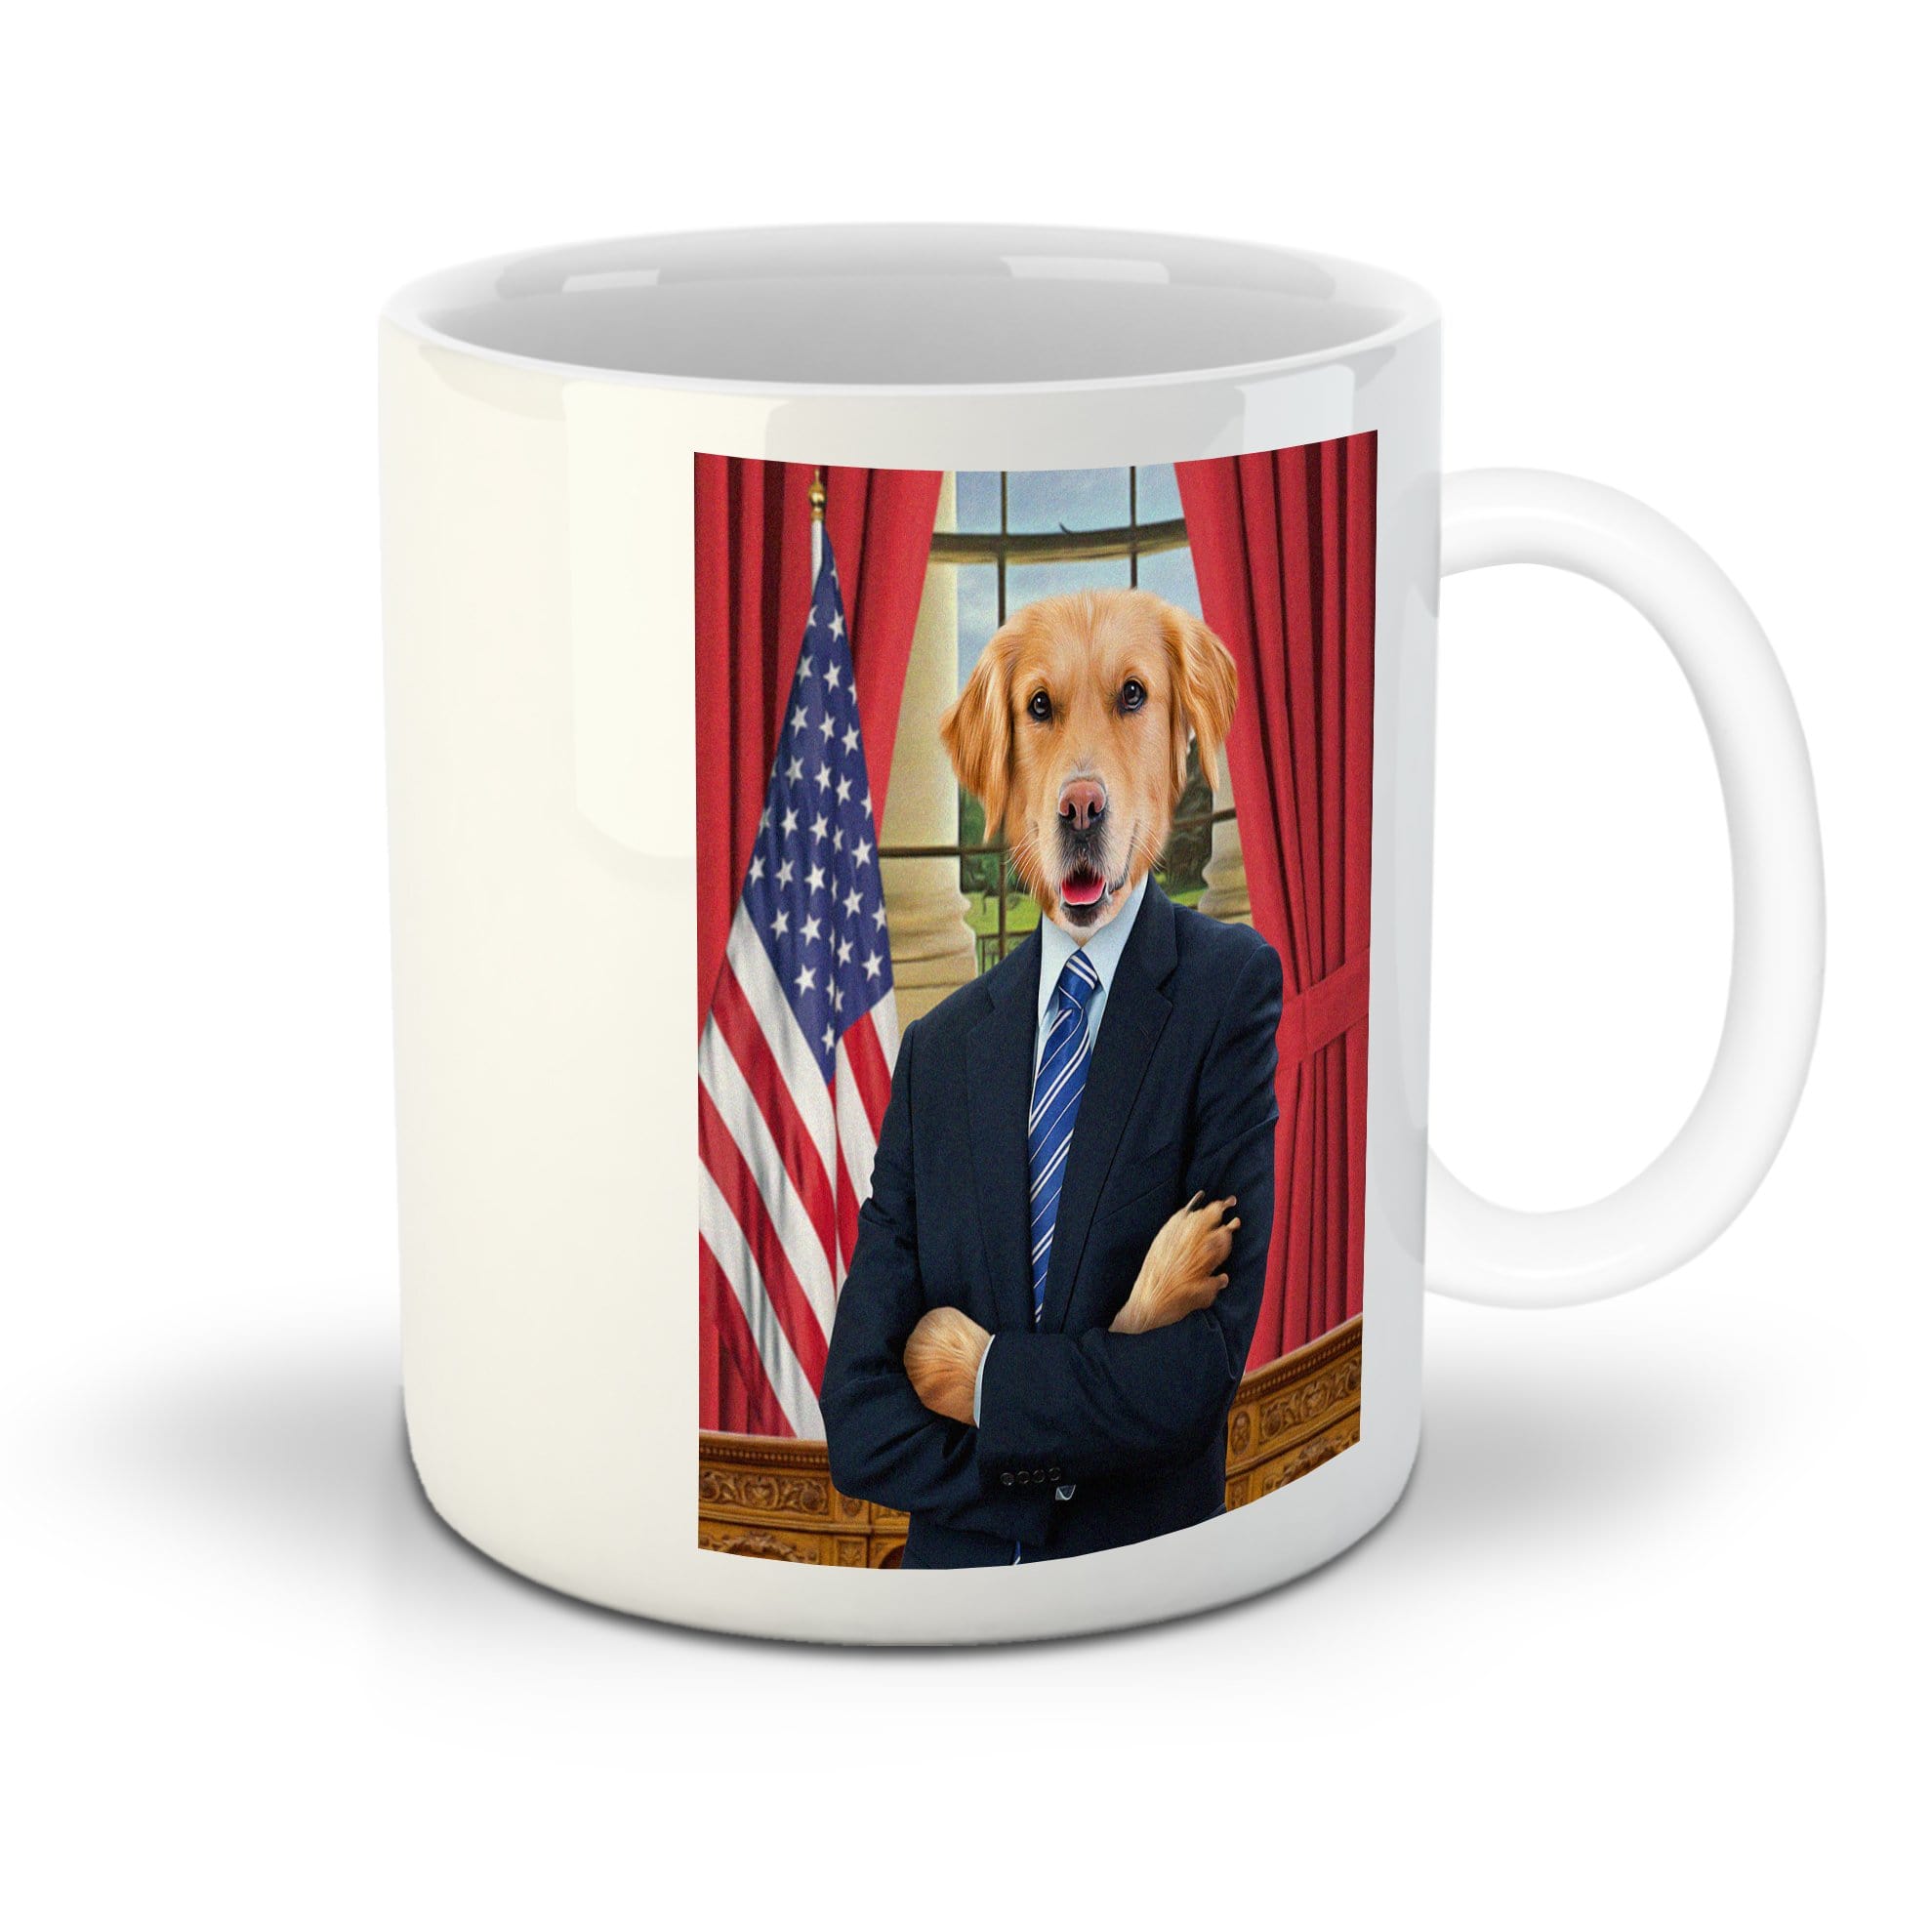 'The President' Personalized Pet Mug